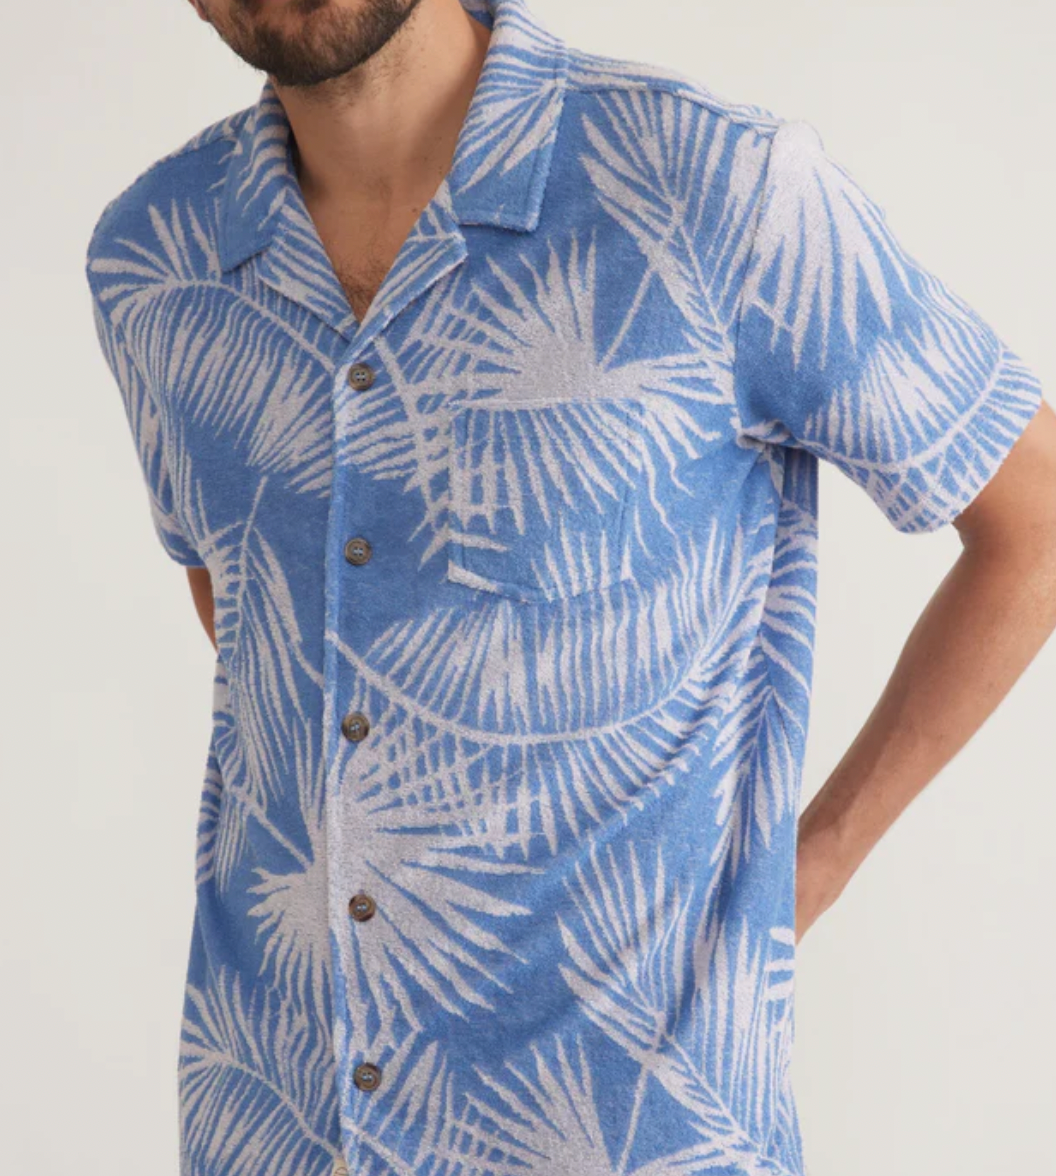 MARINE LAYER Men's SS Terry Out Jacquard Resort Shirt